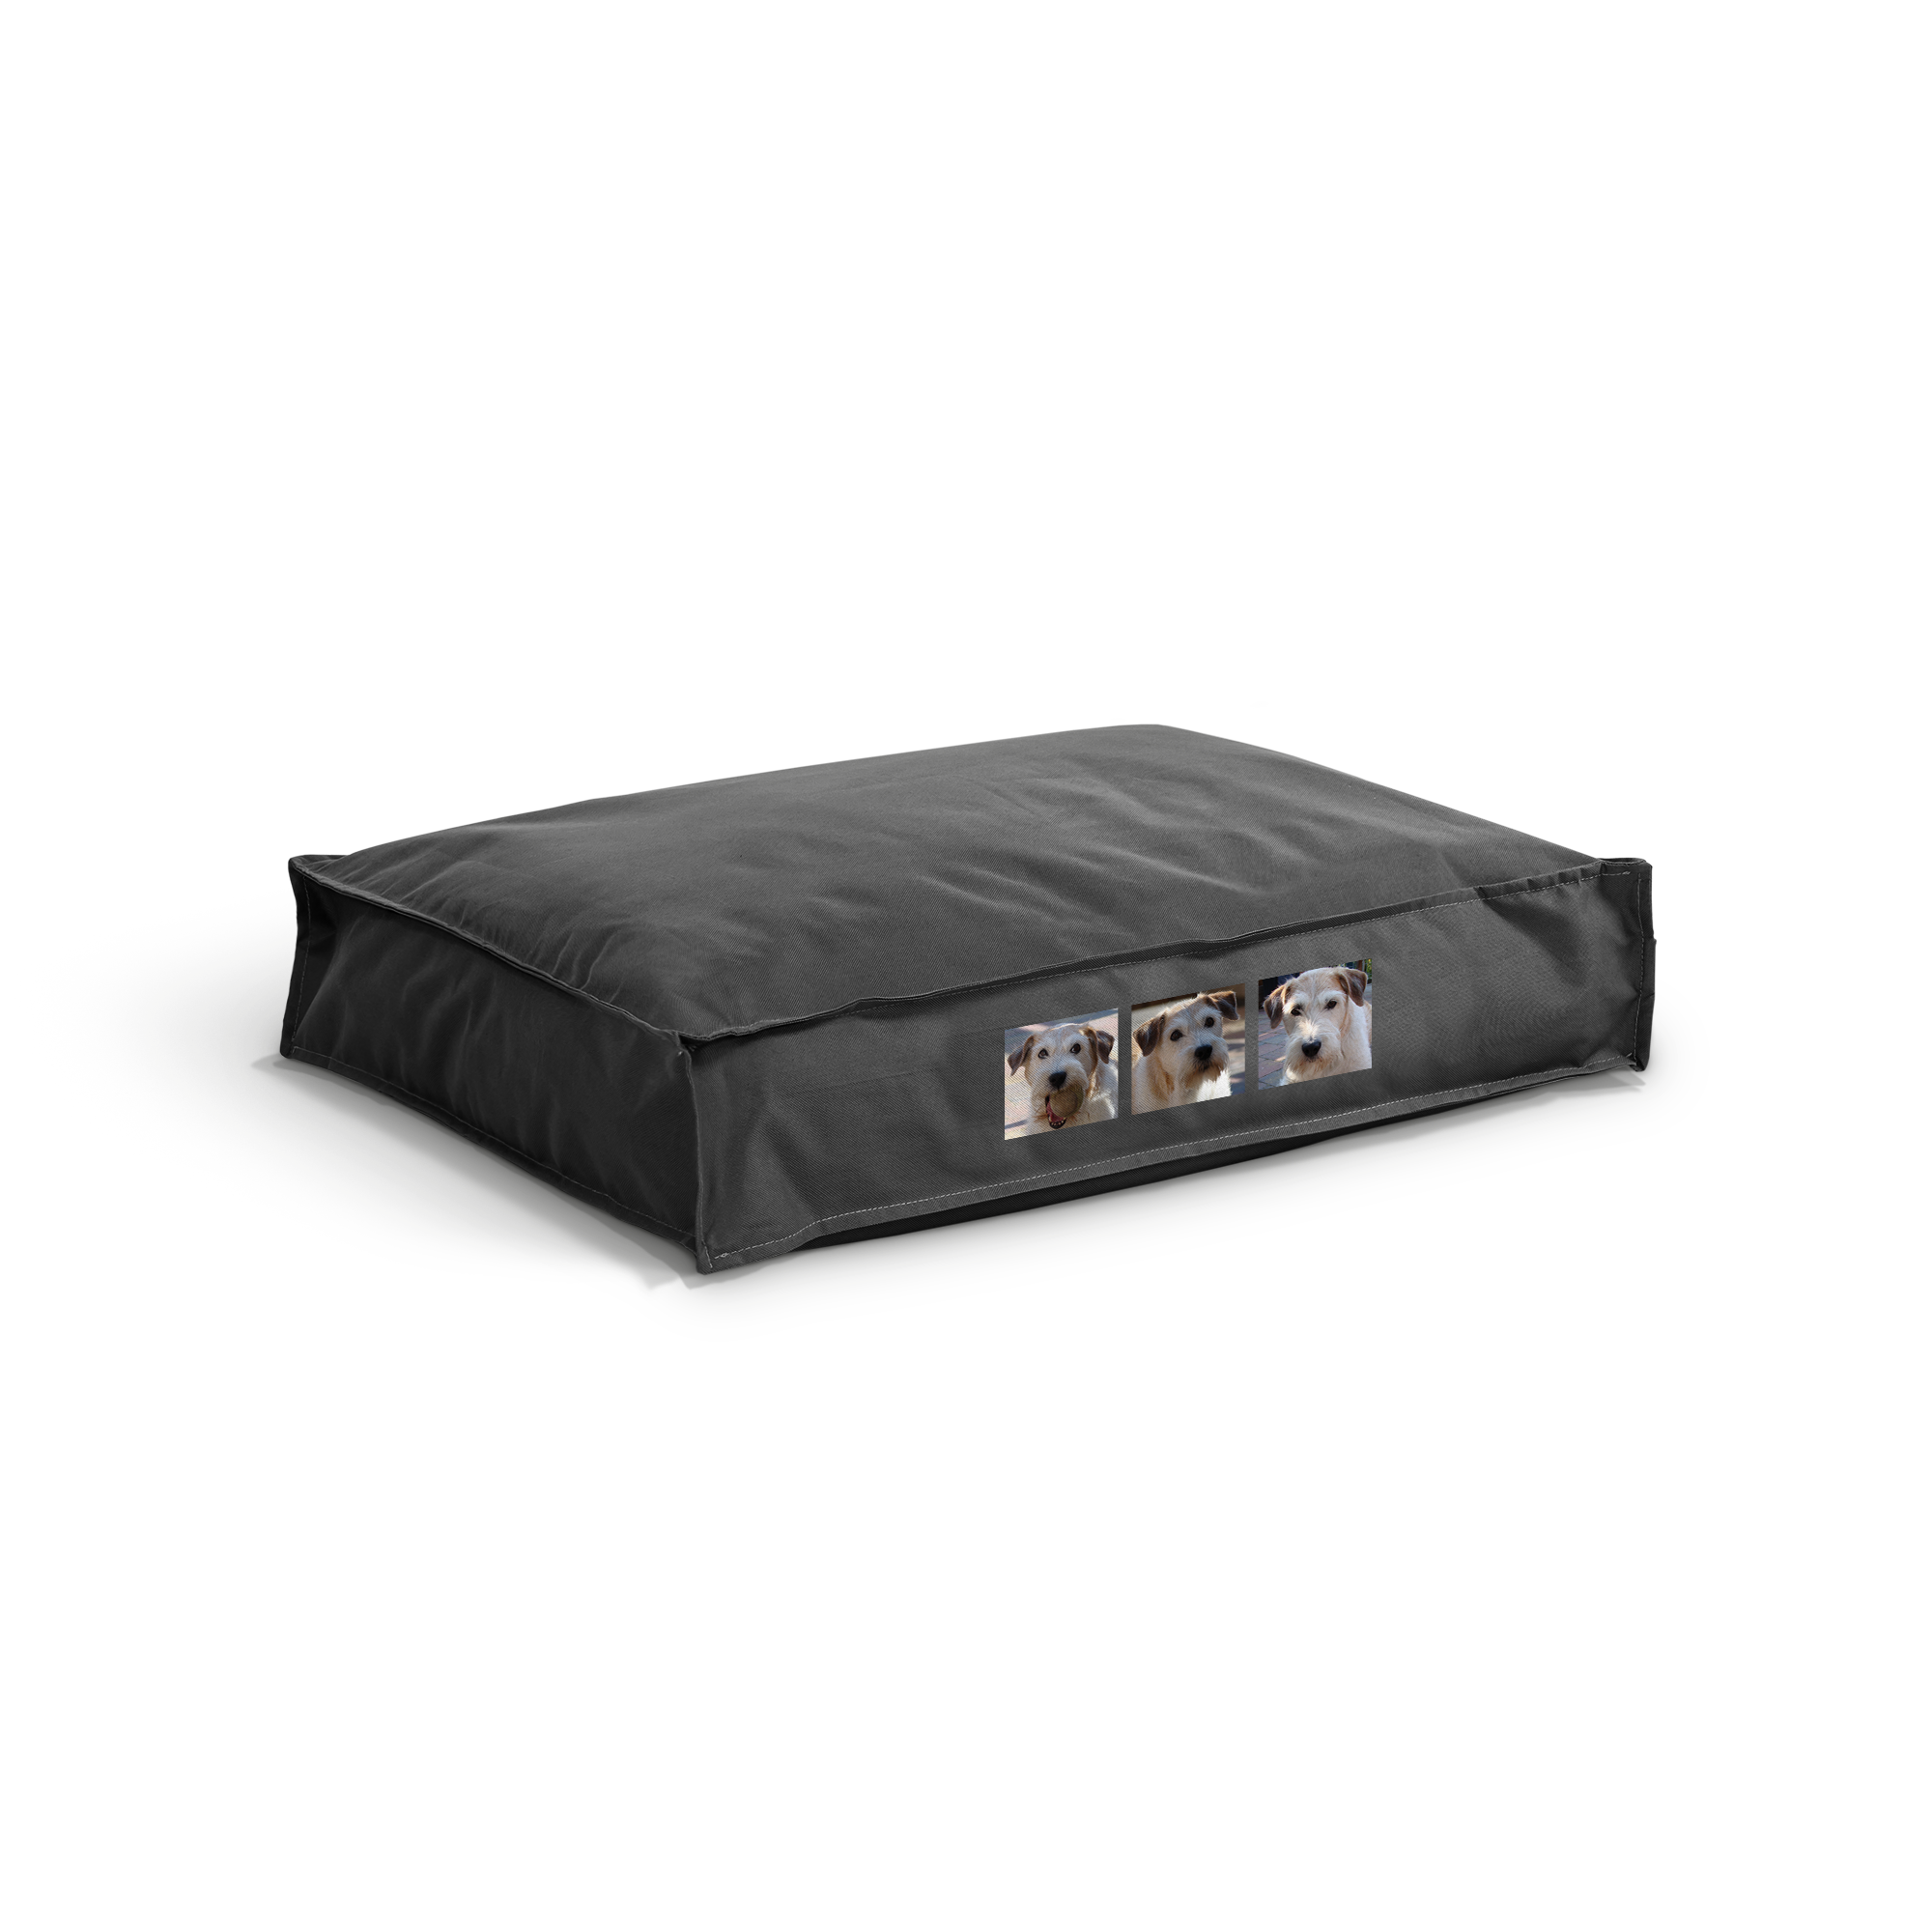 Personalised dog bed - Black - Medium